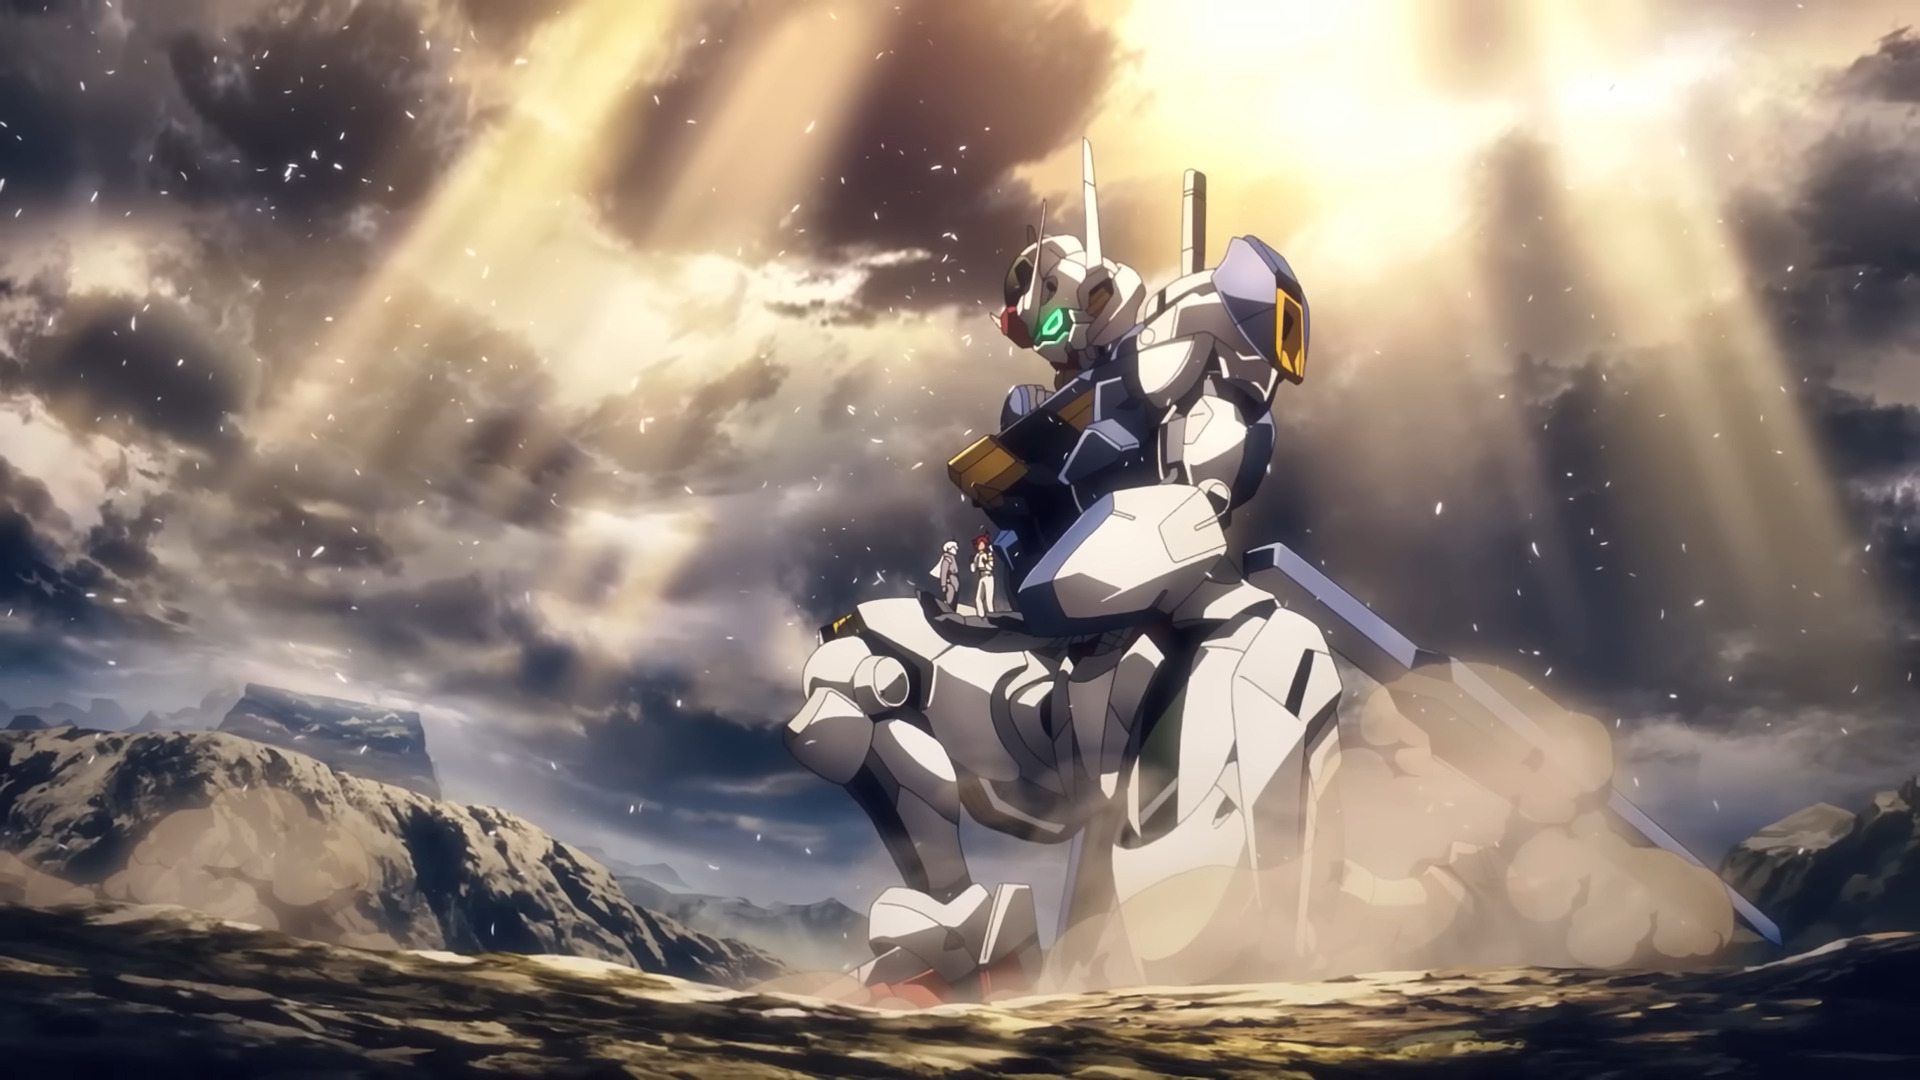 Anime 1920x1080 anime anime screenshot mechs Mobile Suit Gundam: The Witch from Mercury Super Robot Taisen Gundam Aerial artwork digital art